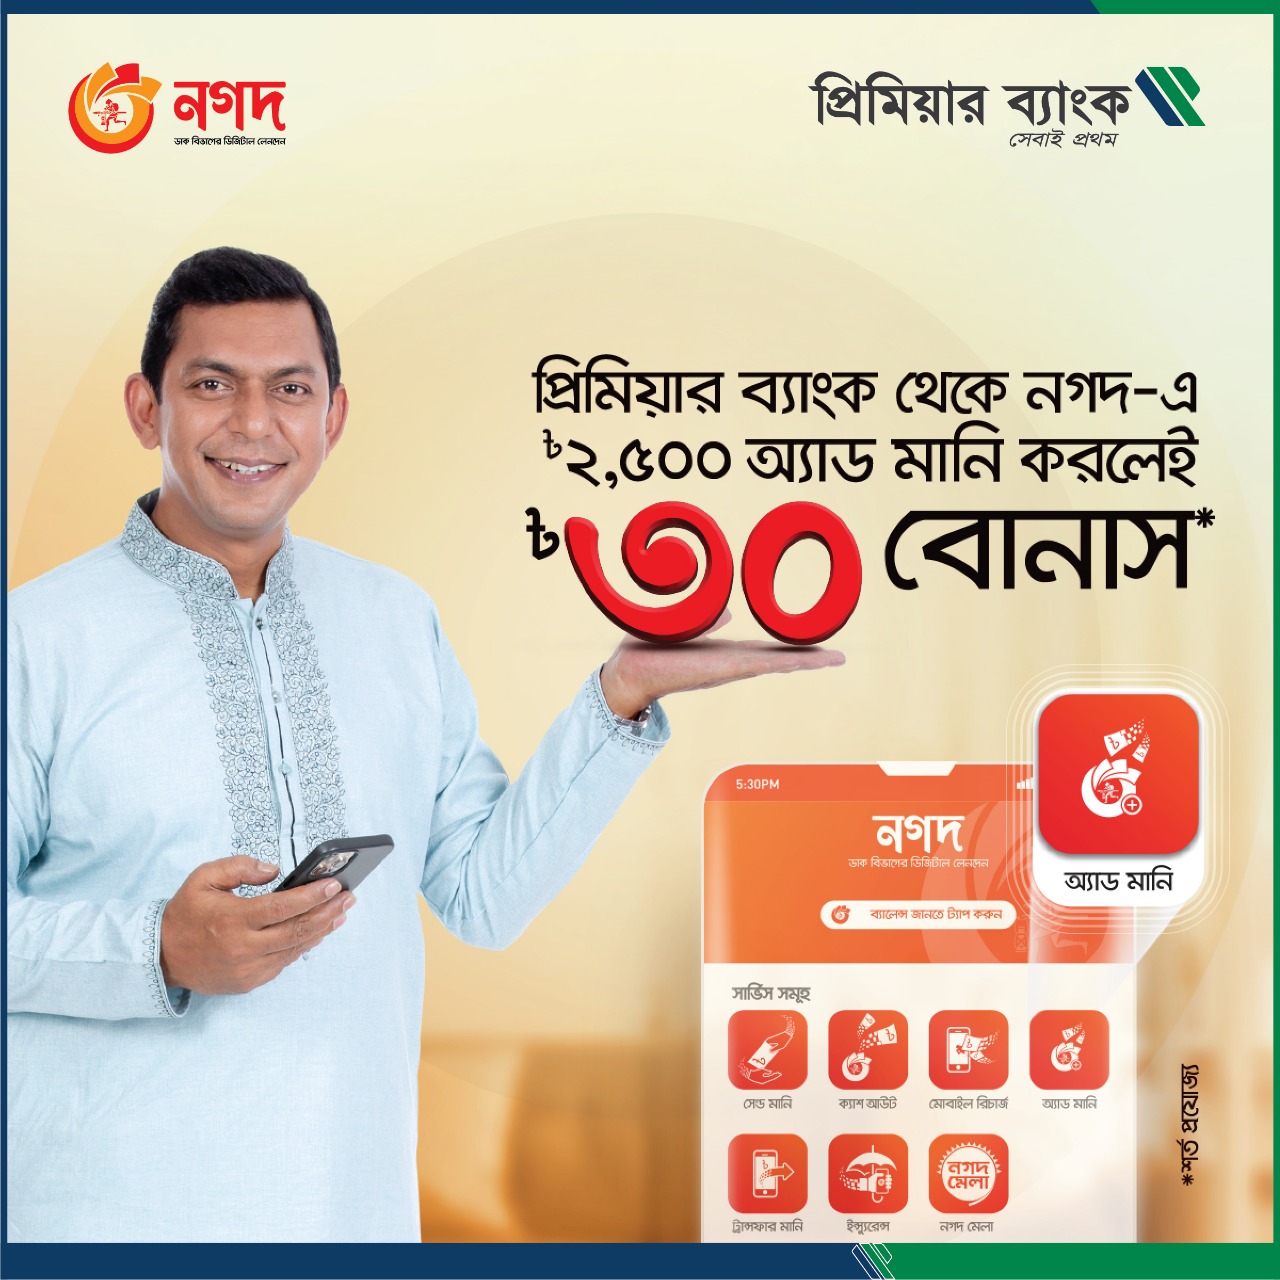 Get bonus by adding money to Nagad from Premier Bank